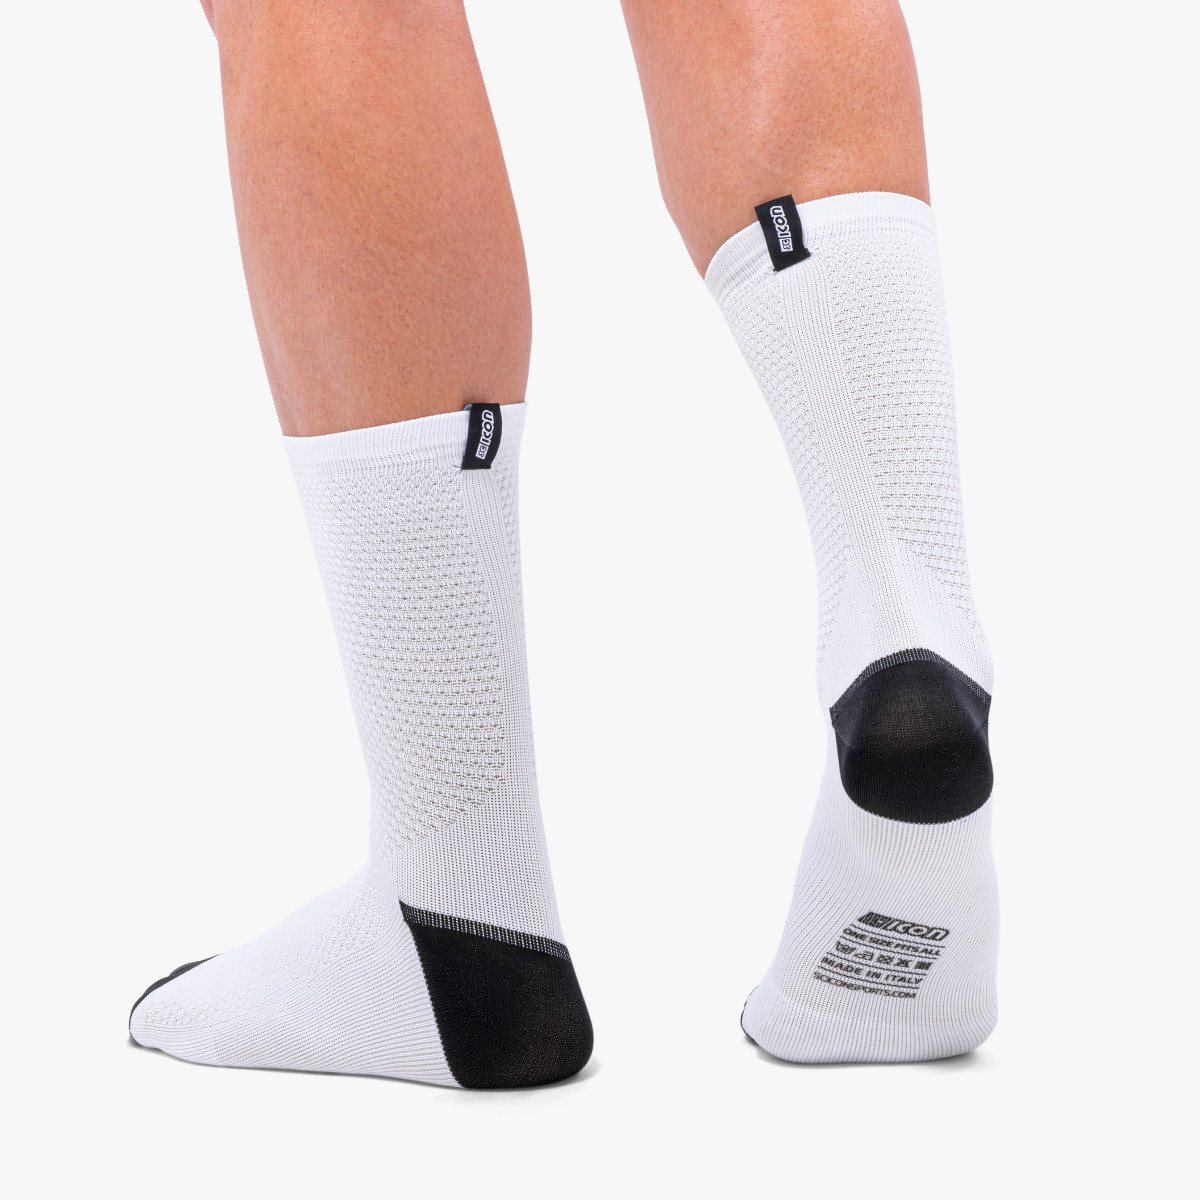 scicon cycling socks